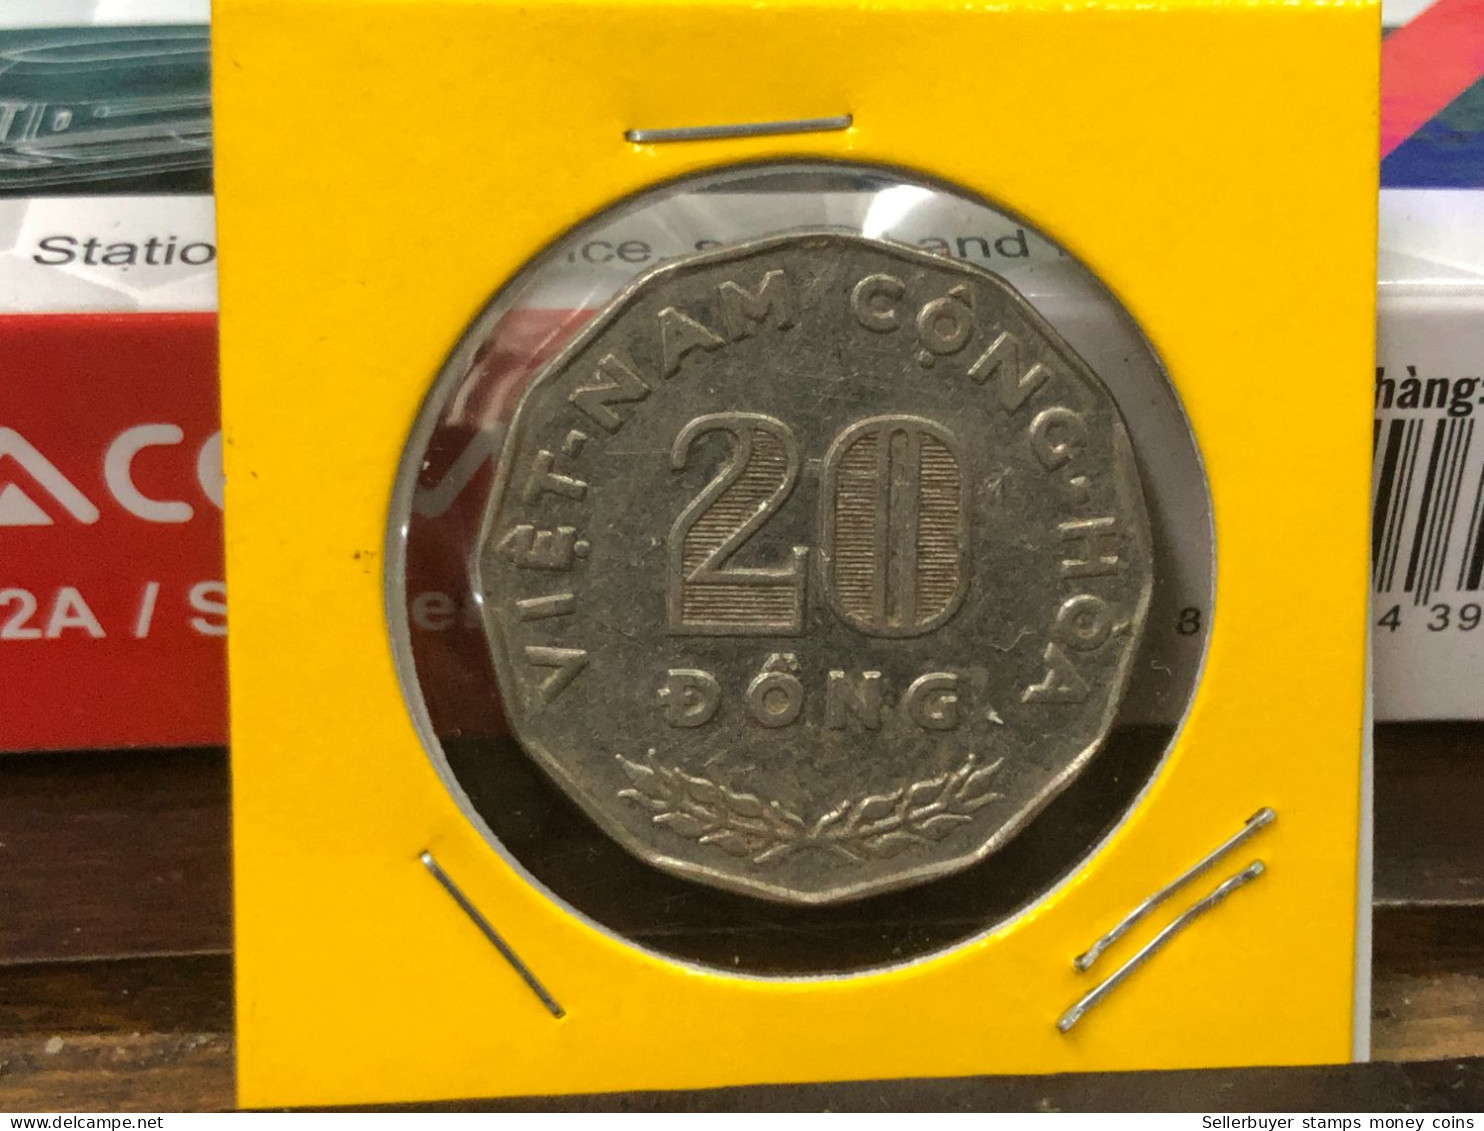 SOUTH VIET-NAM COINS 20 DONG 1968 KM#10-NICKEL CLAD STEEL -1 Pcs- Aunc No 1 - Vietnam